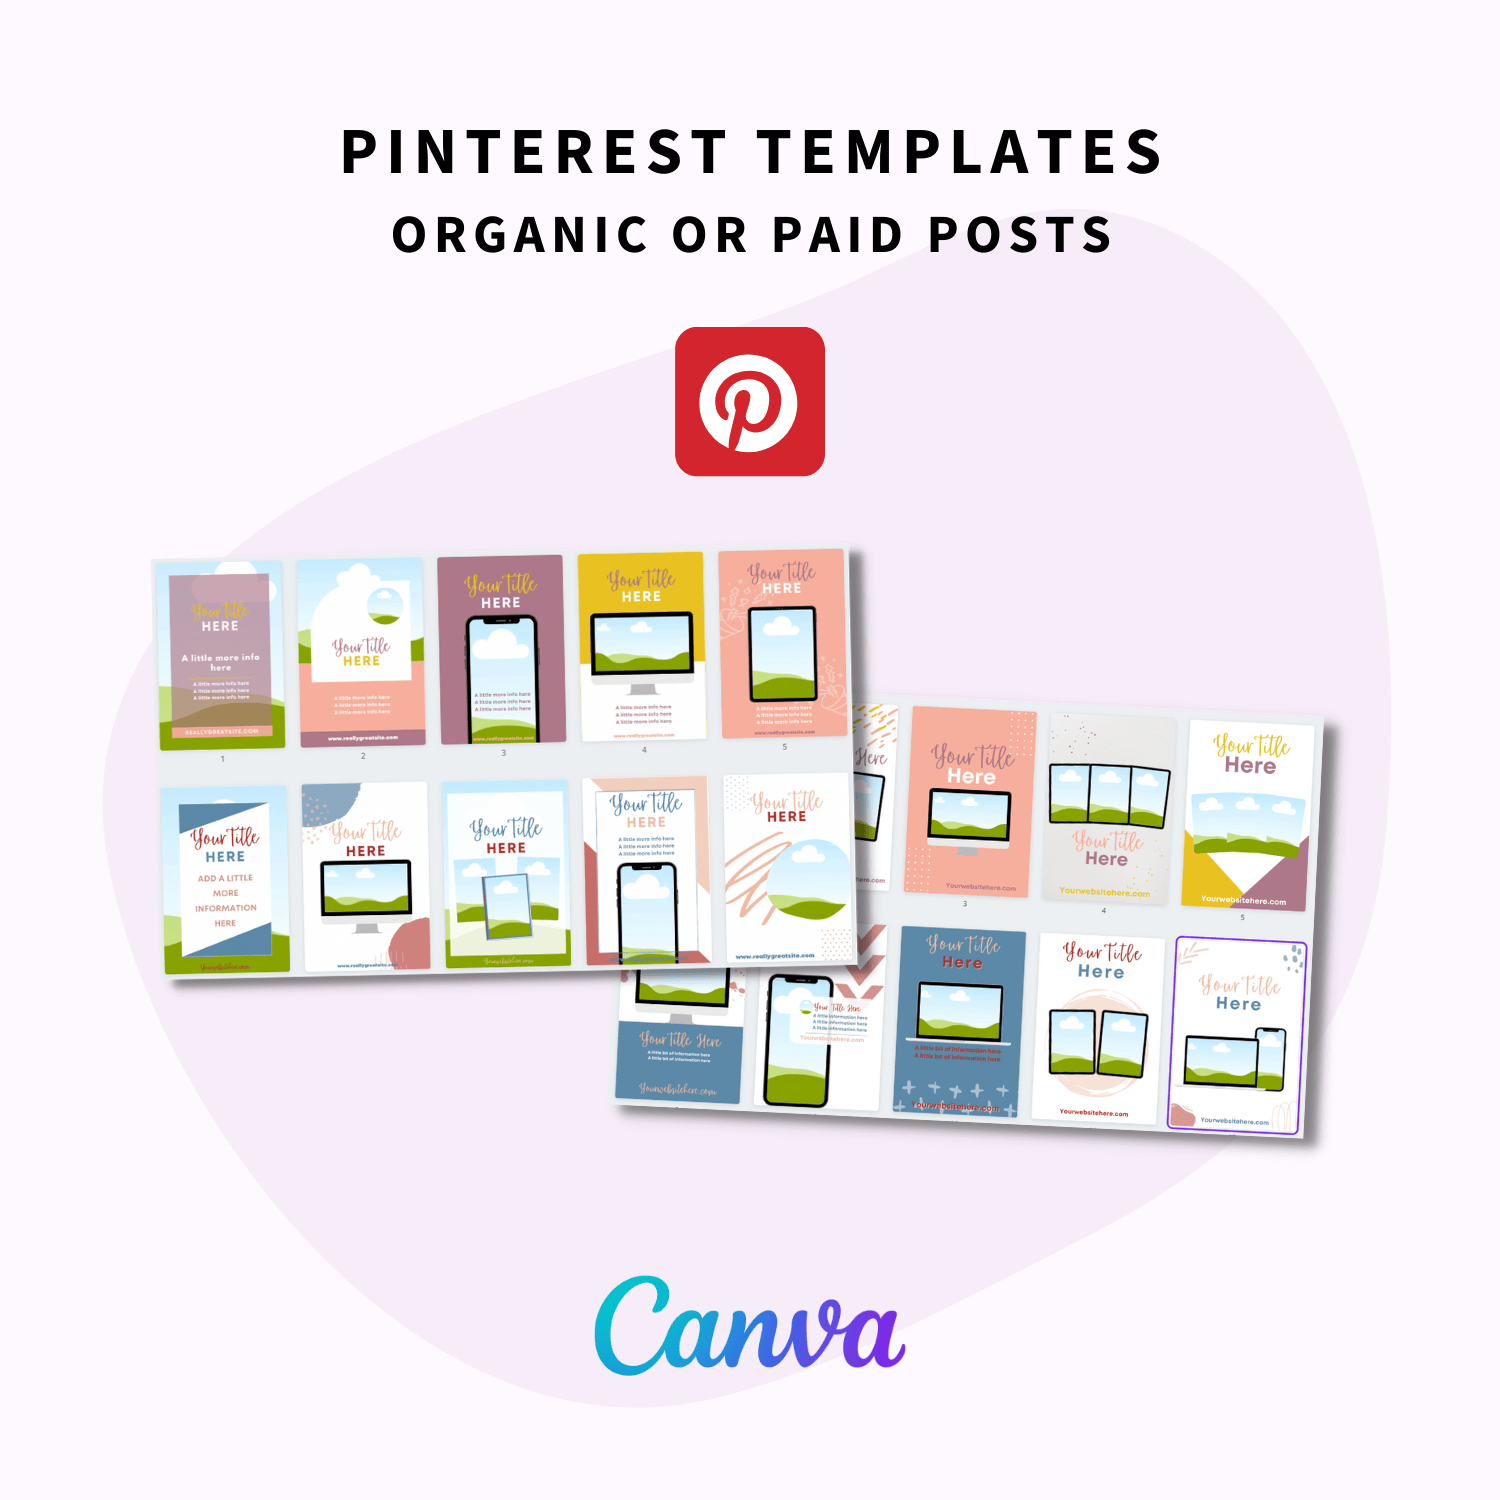 Pinterest templates in the Social Media Super Bundle Toolbox